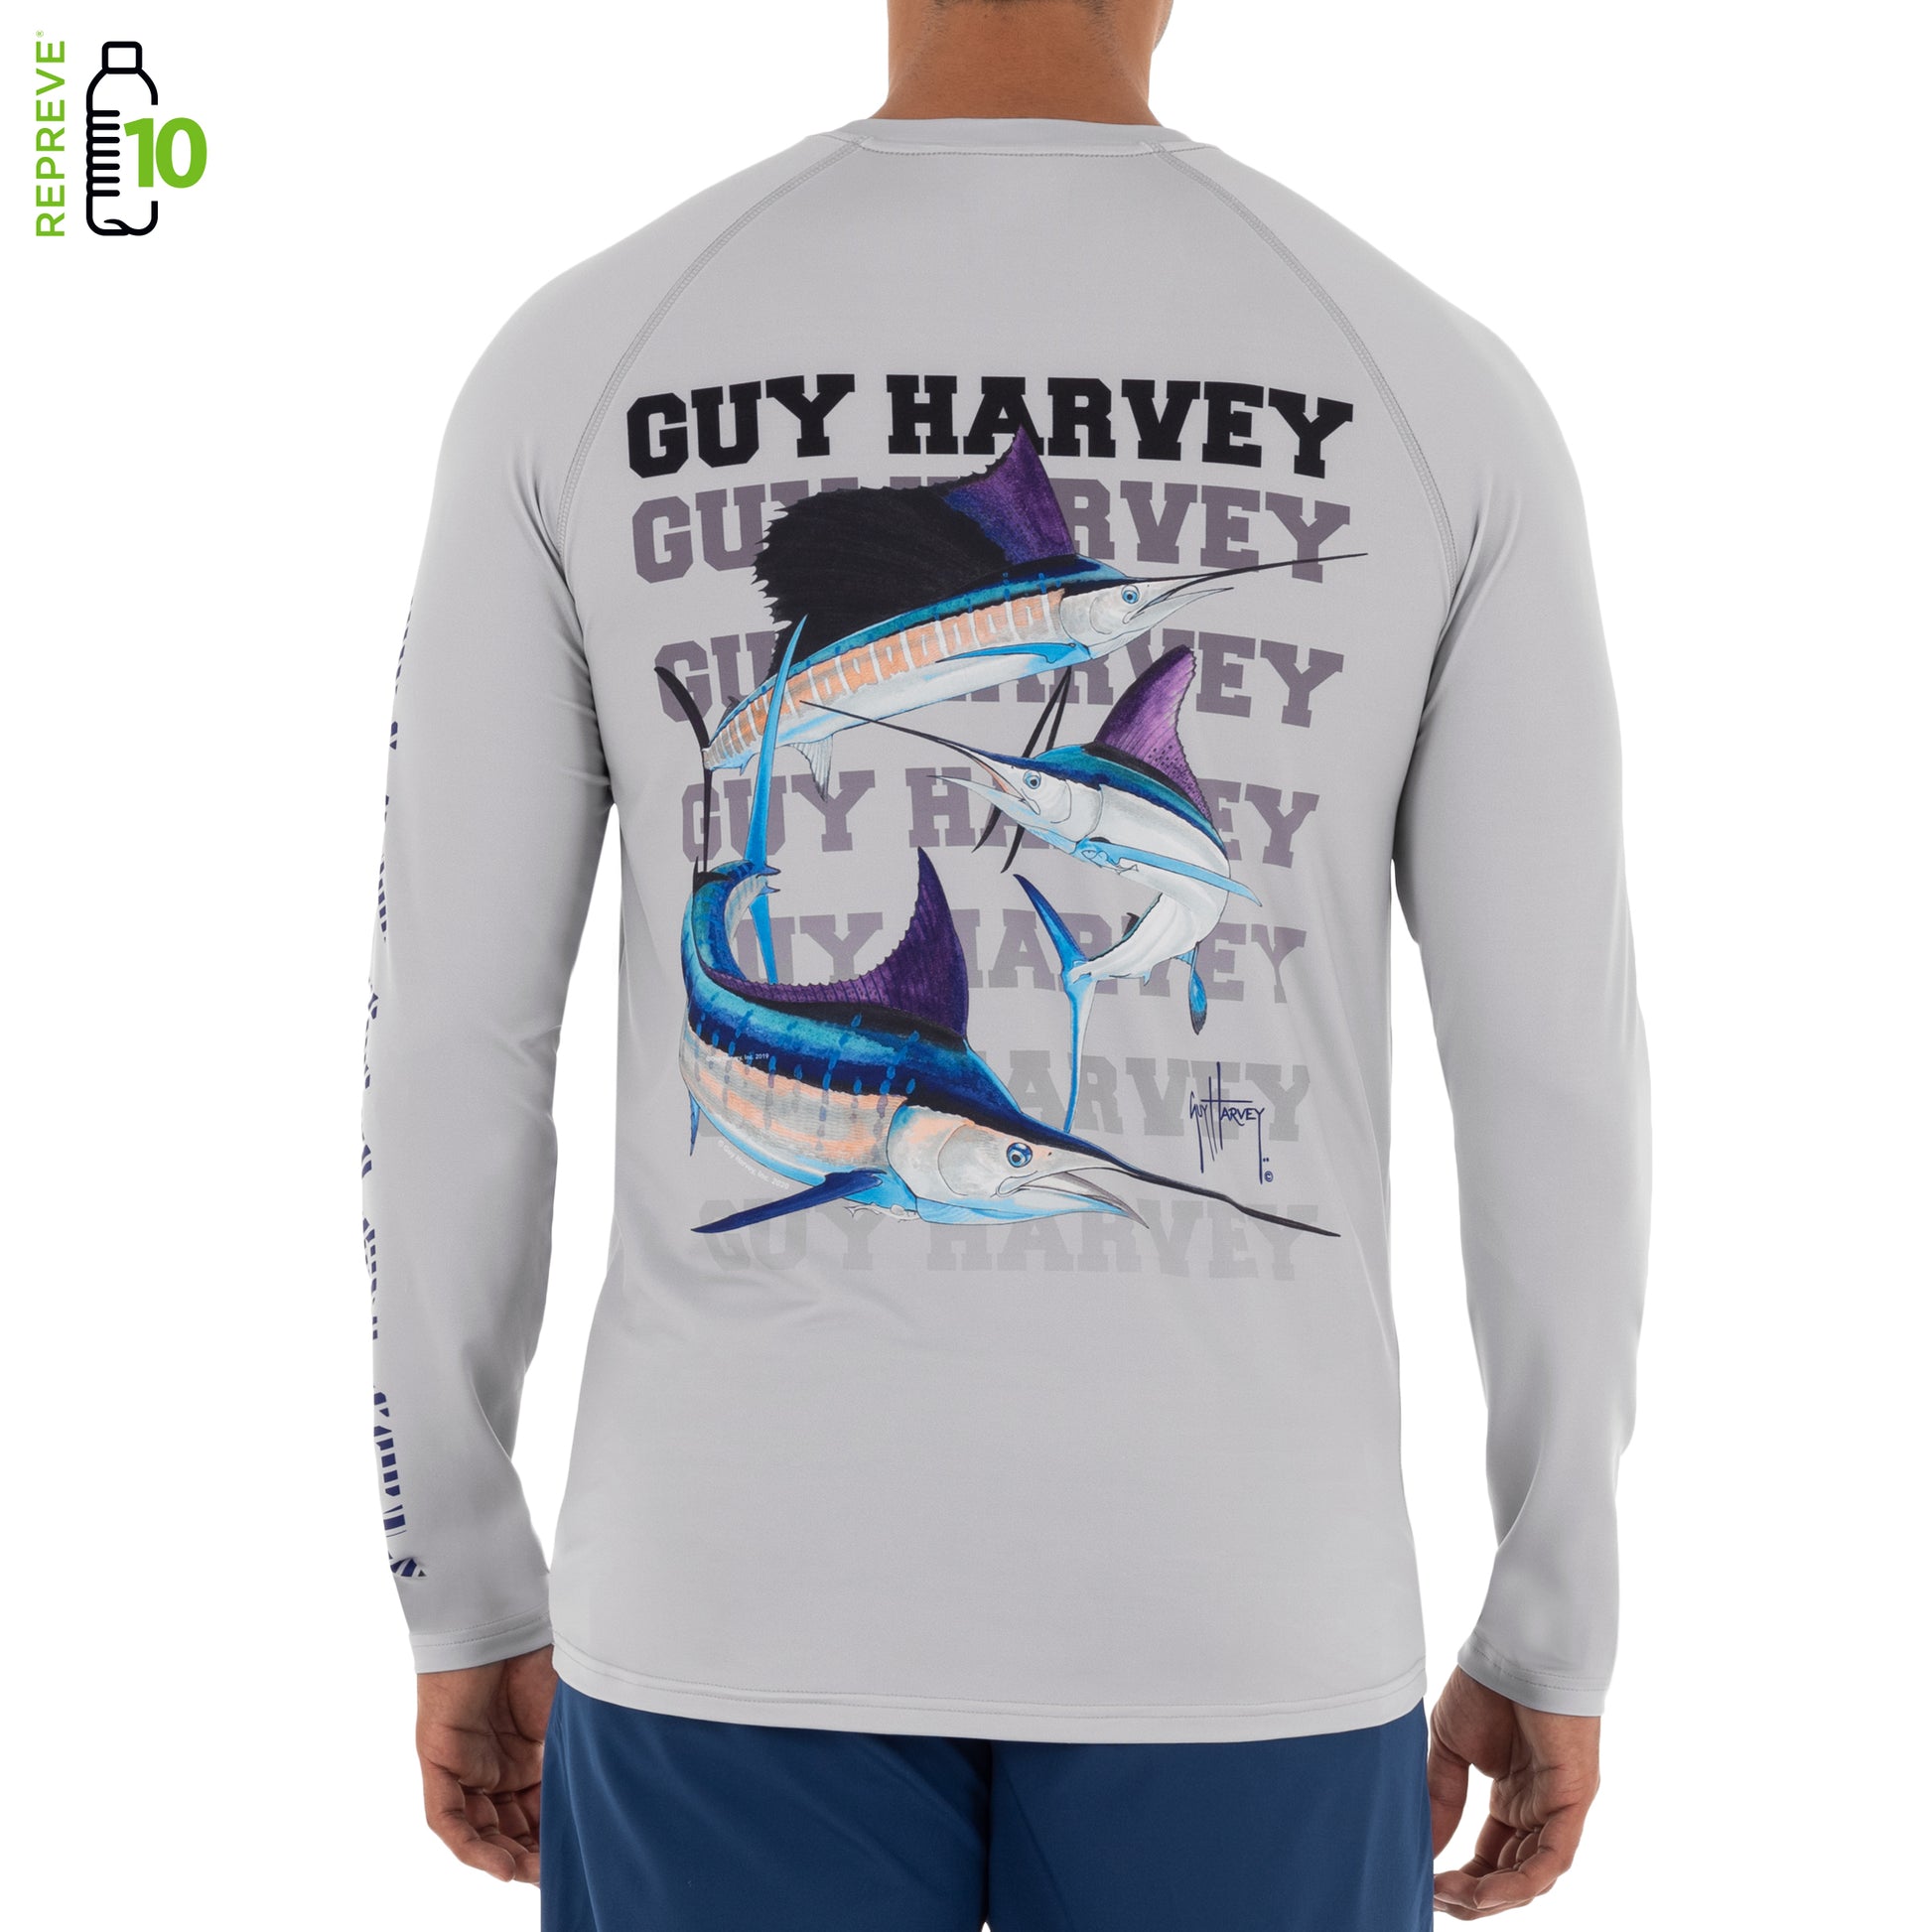 Guy Harvey Graphic Tshirt Fishing Shirt Sailfish Long Sleeve Gray Size  Small